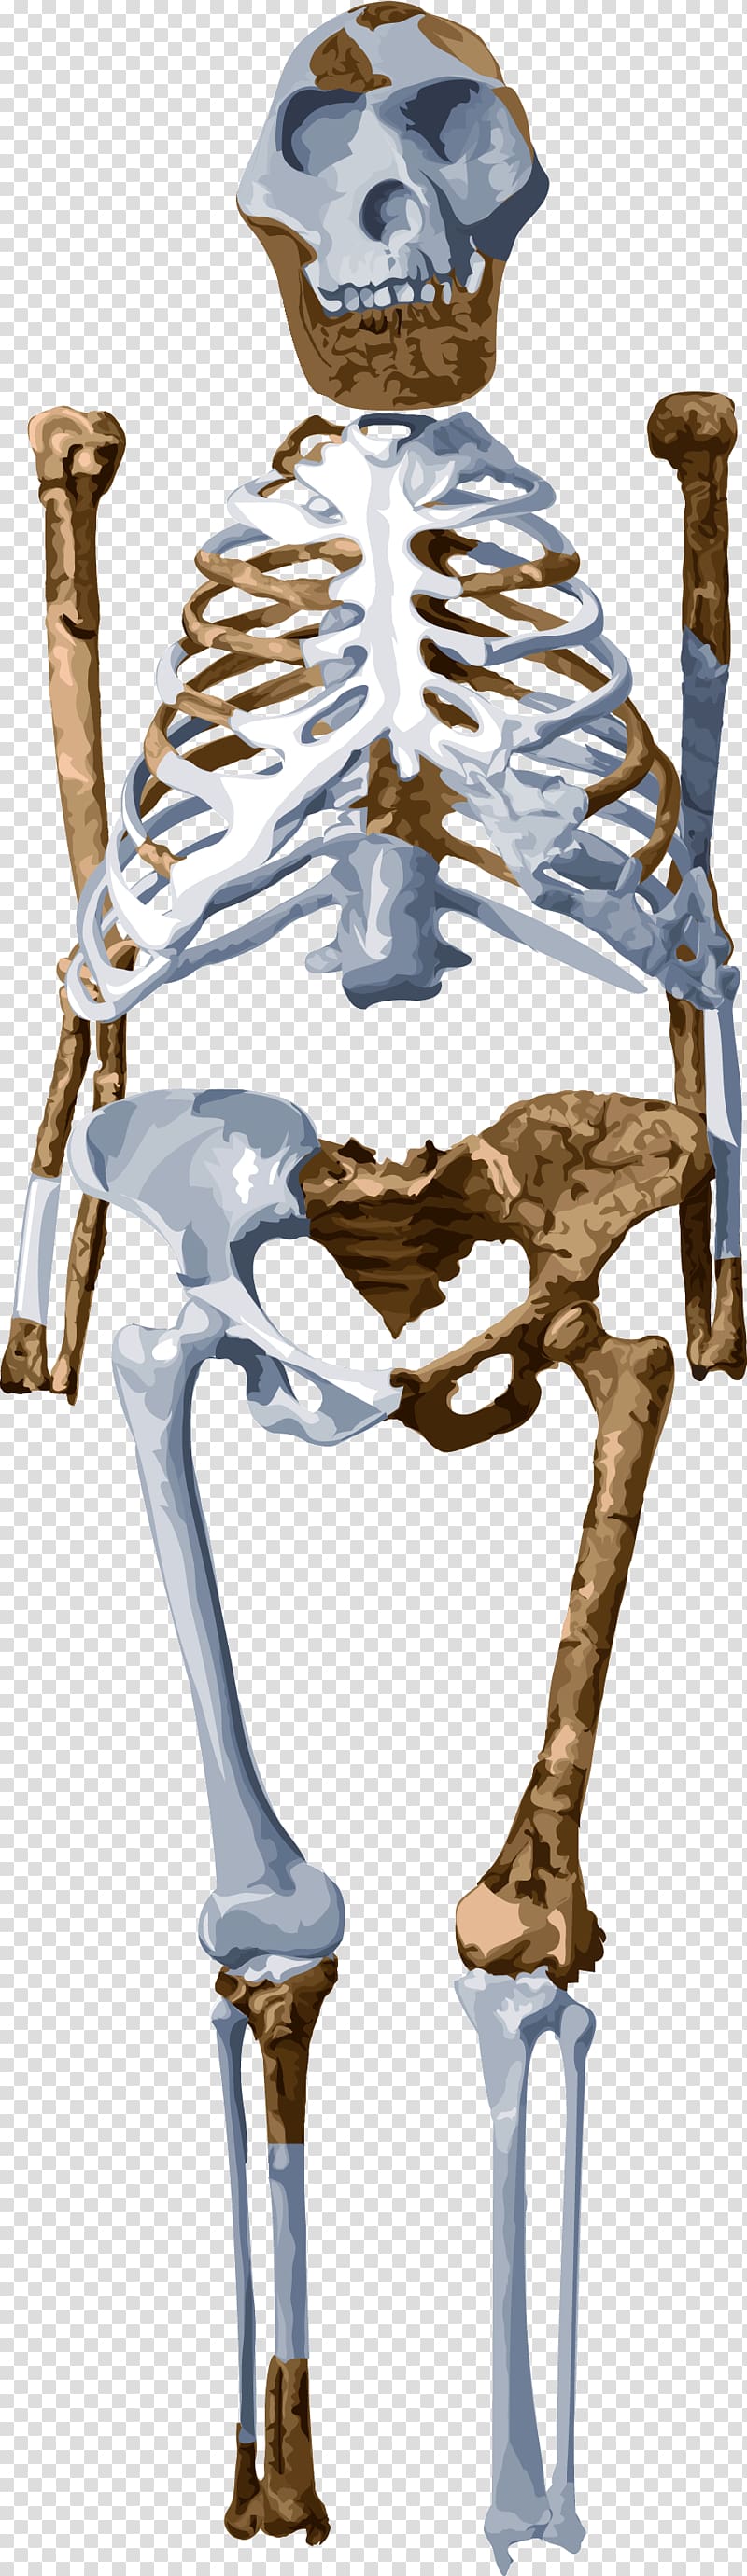 Skeleton Lucy Homo sapiens Australopithecus afarensis Fossil, skeleton frame transparent background PNG clipart